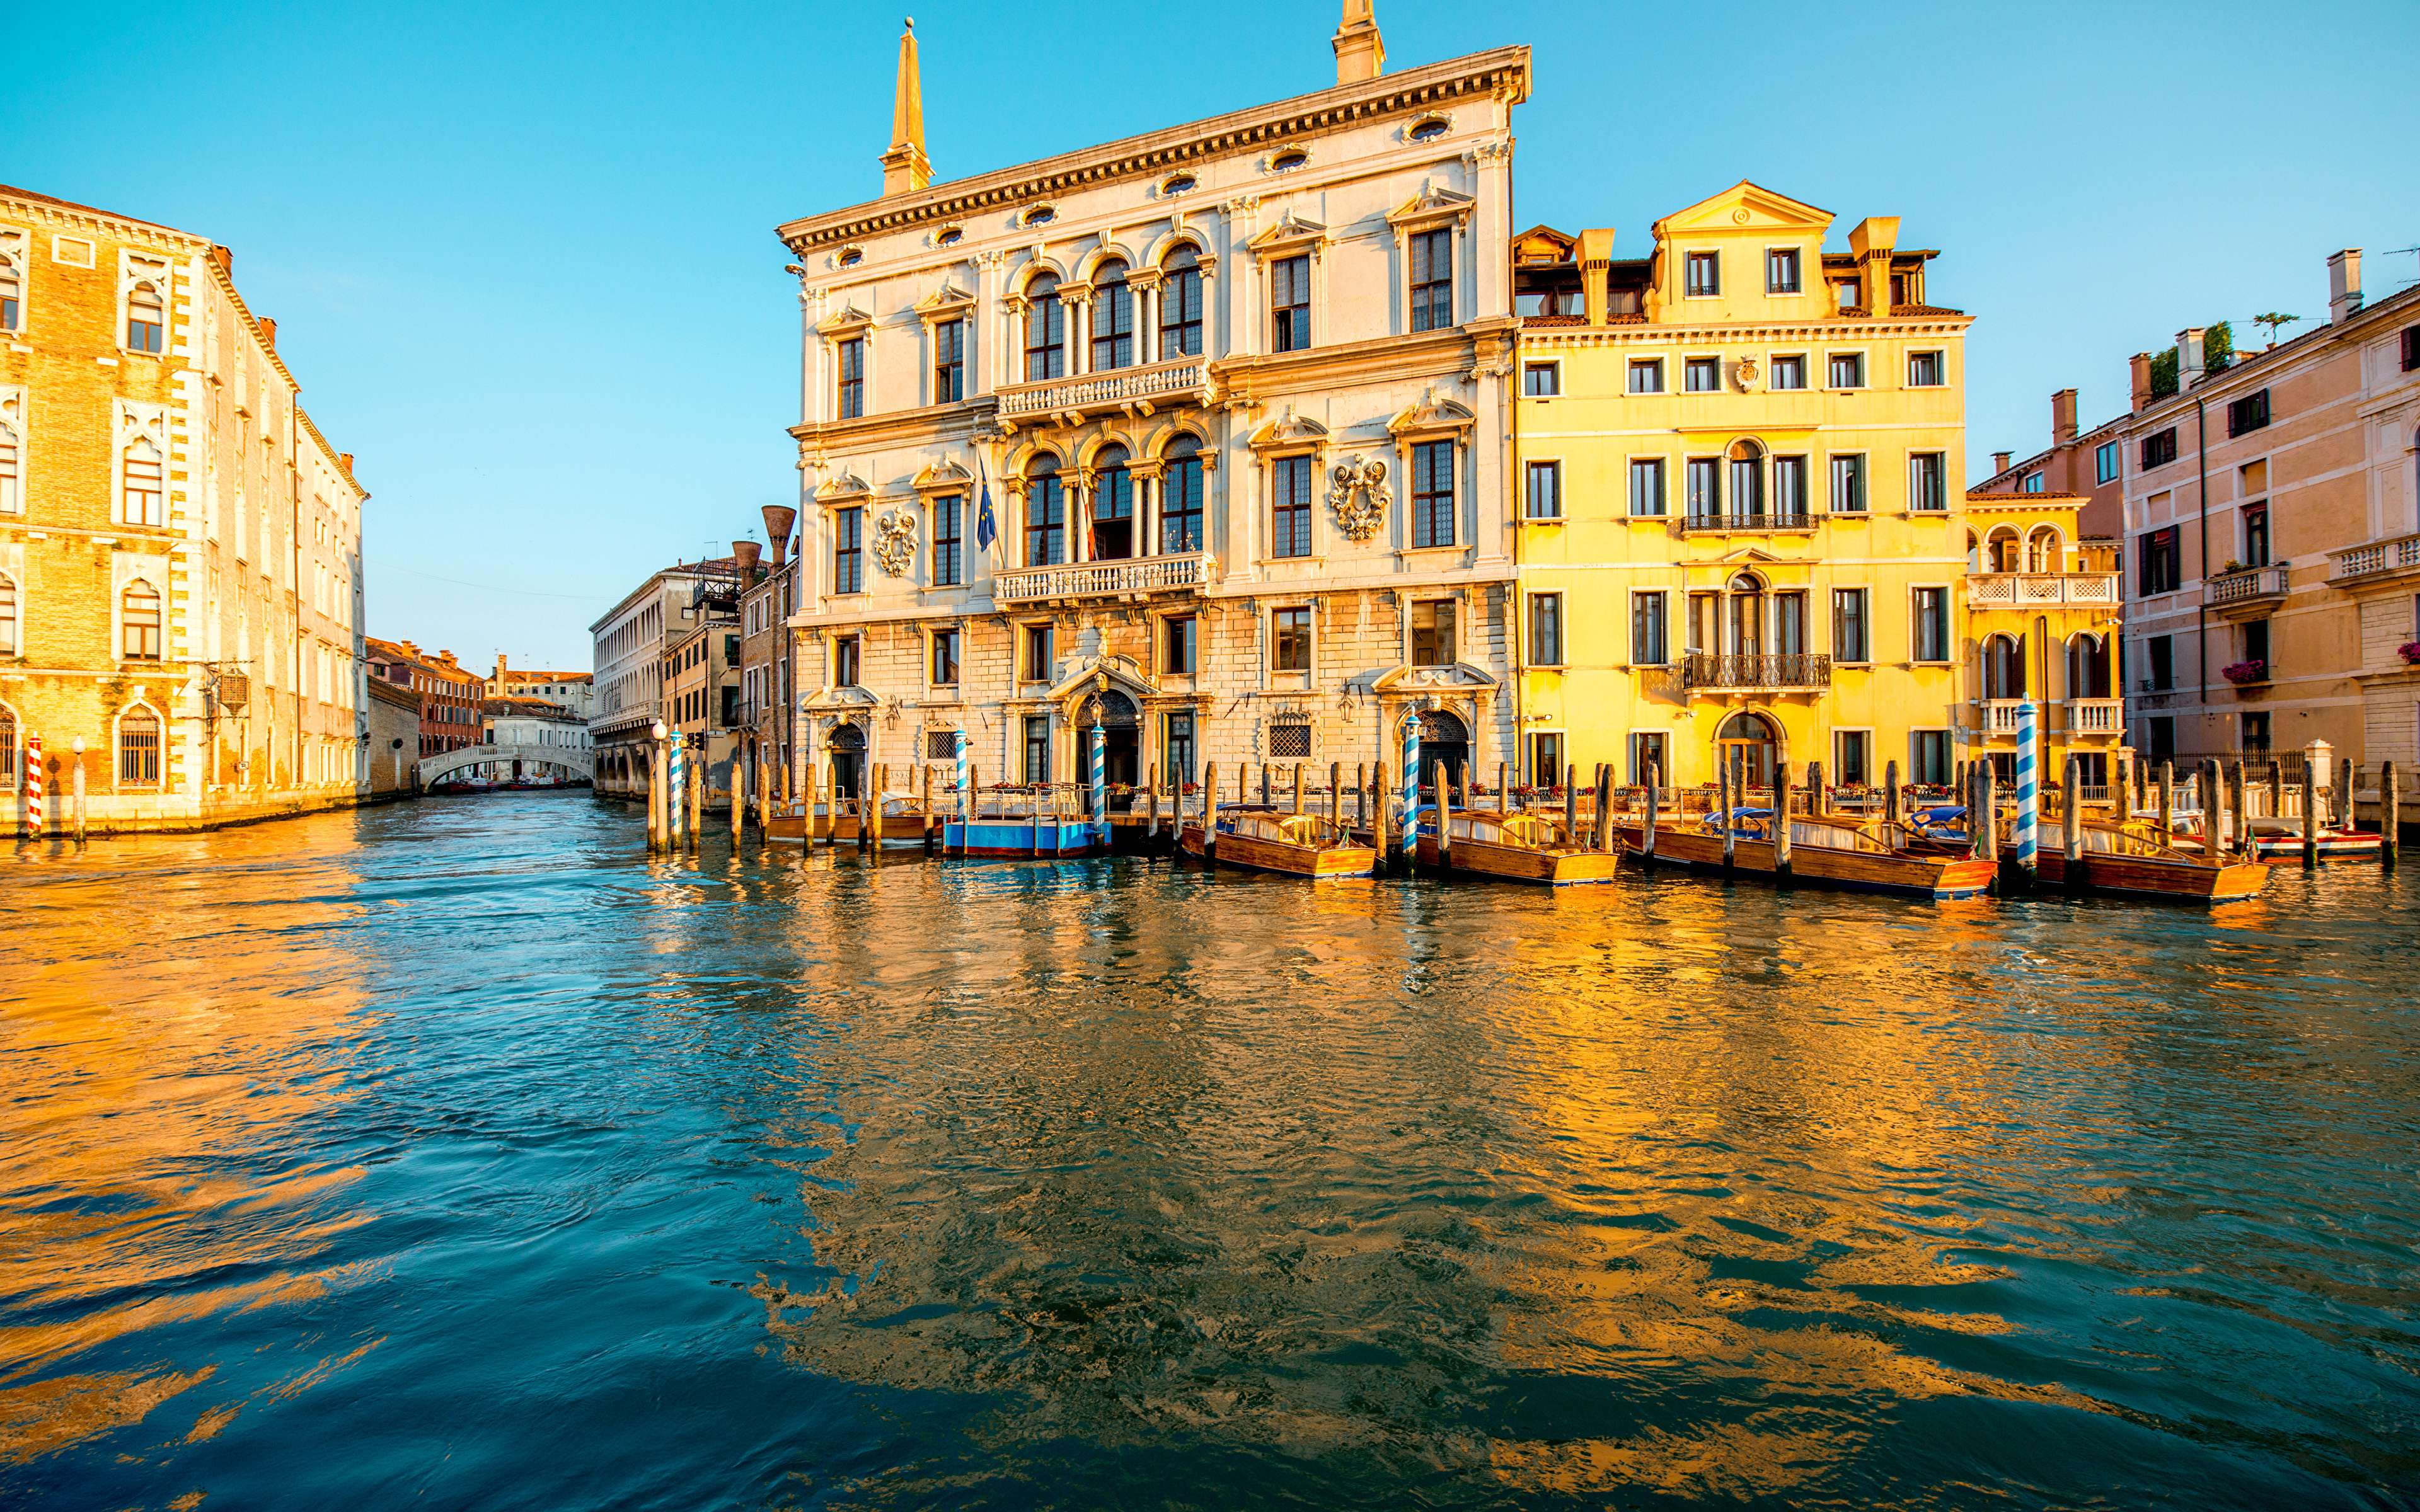 Город на реке в италии. Венеция Италия. Город на воде в Италии Венеция. Венеция (коммуна).